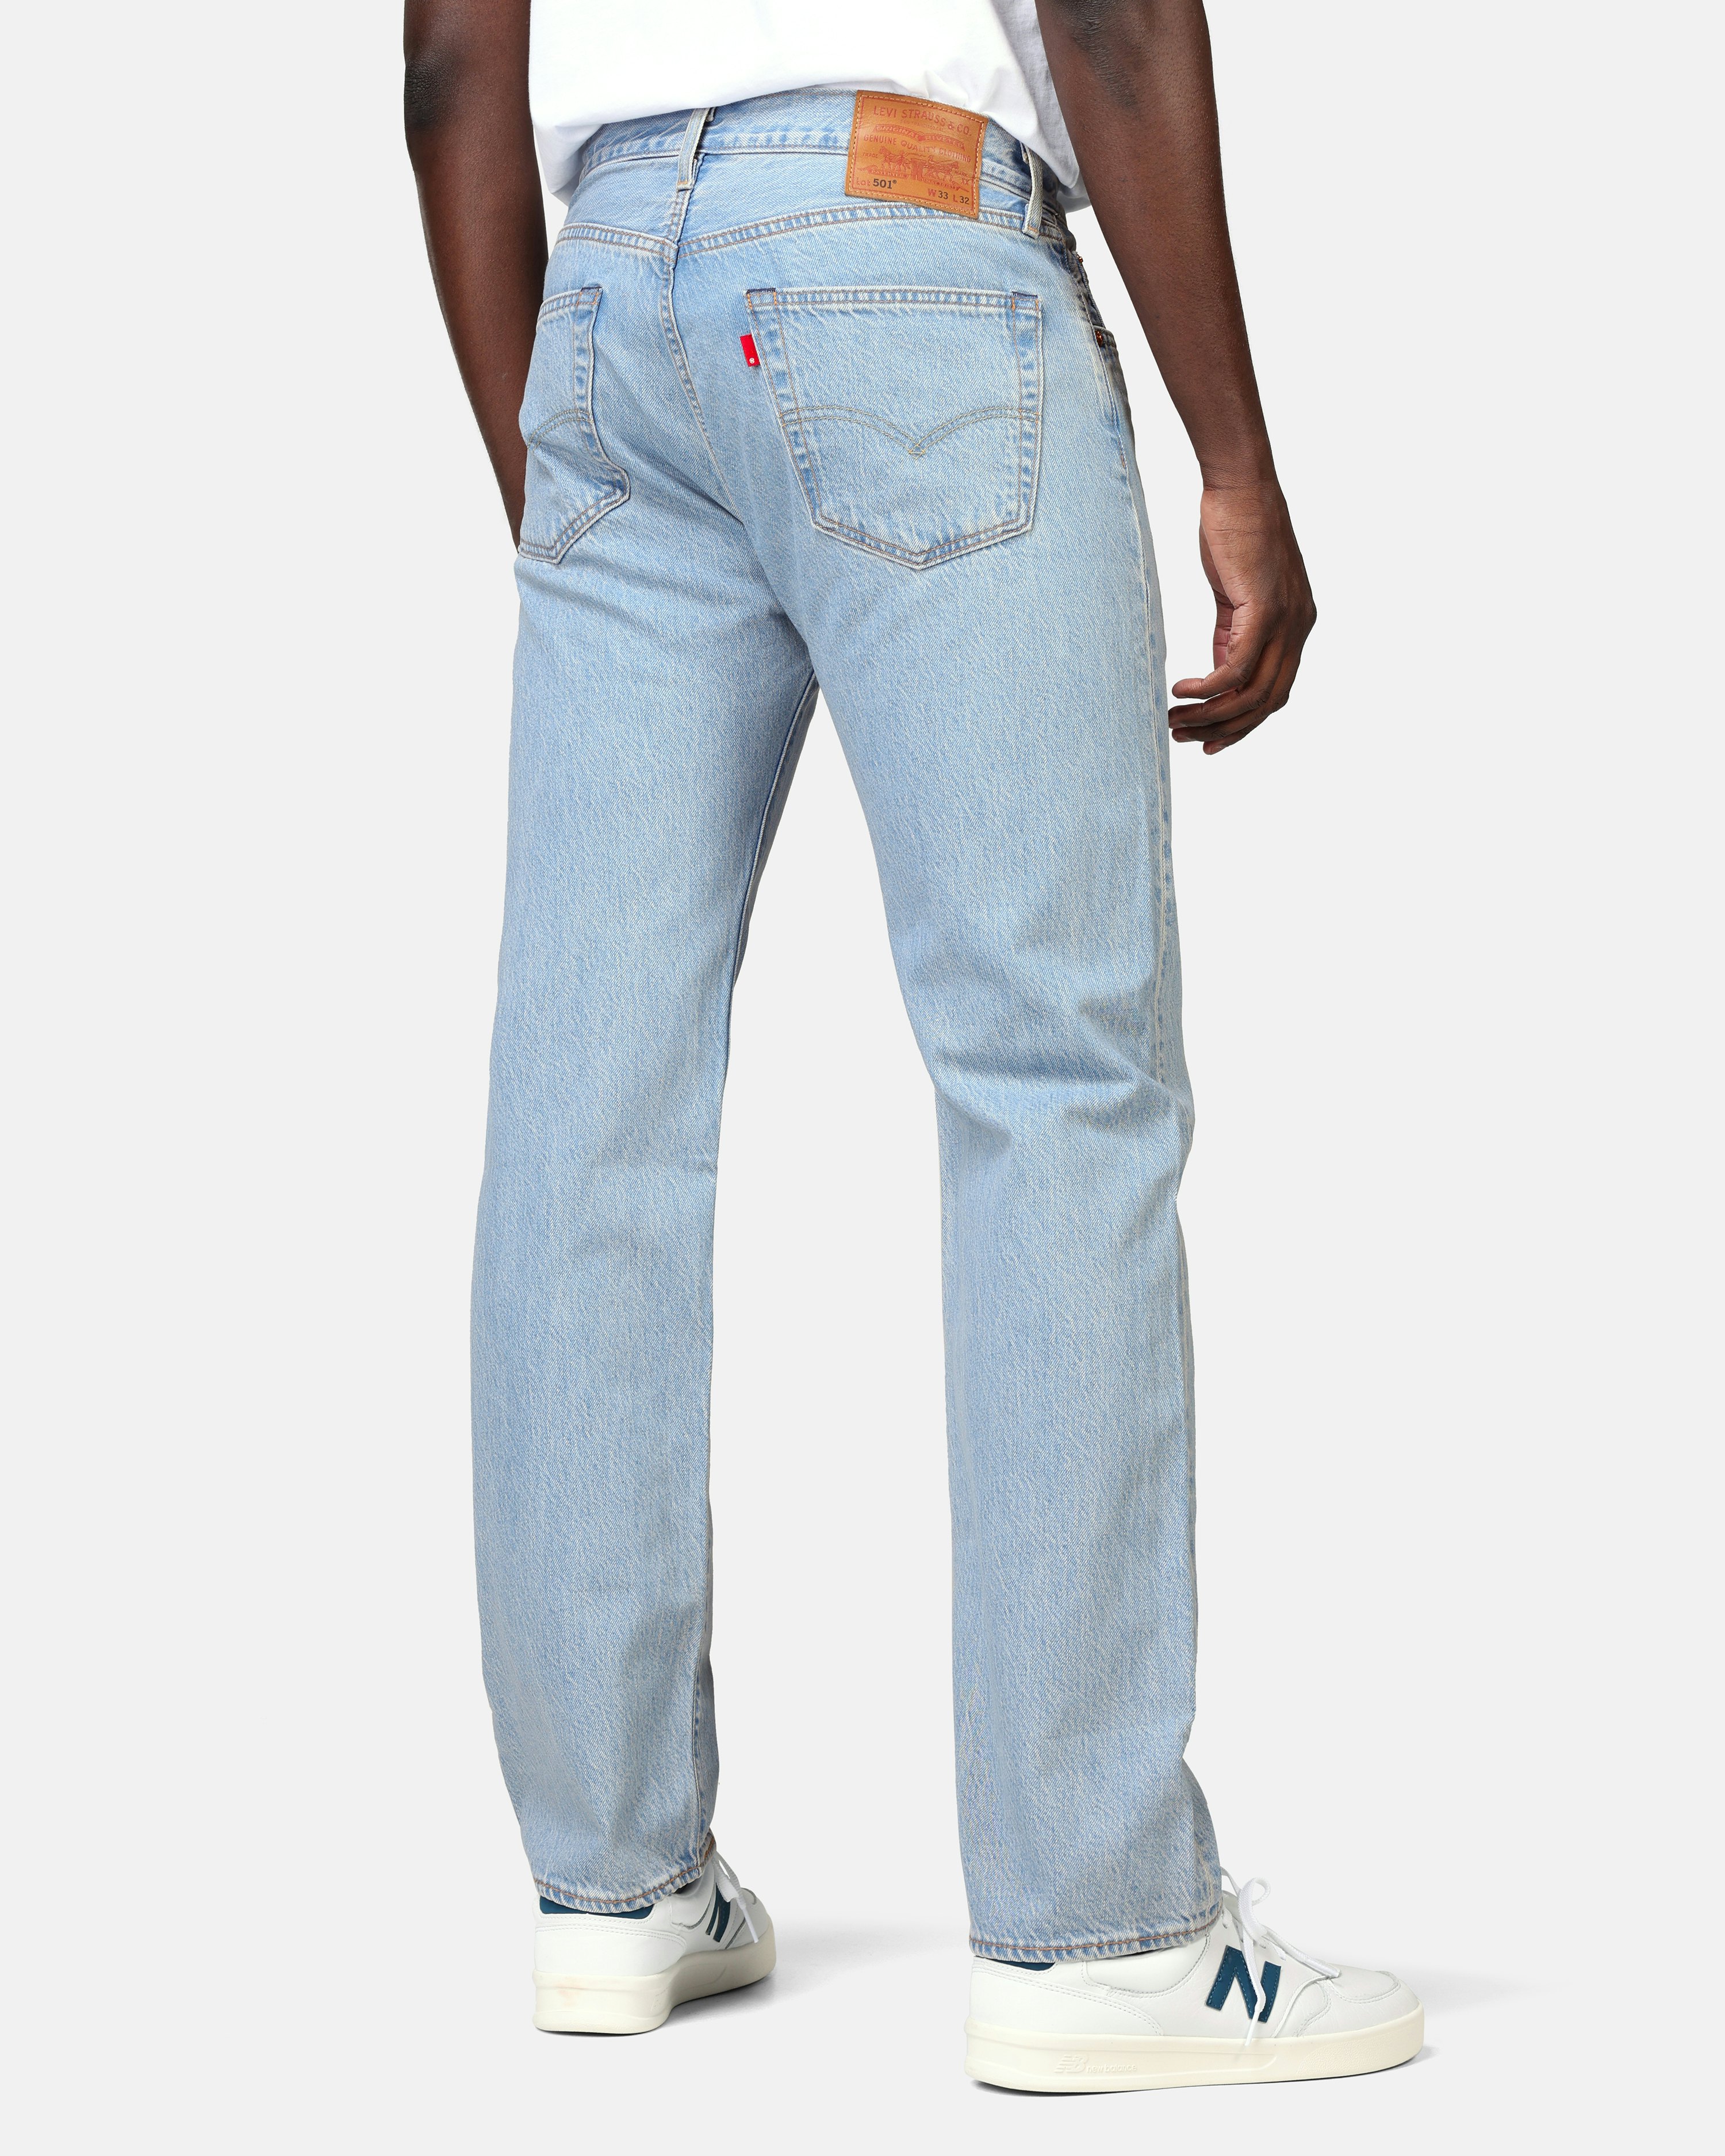 Levis Jeans - 501 Original Blue | Men | Junkyard